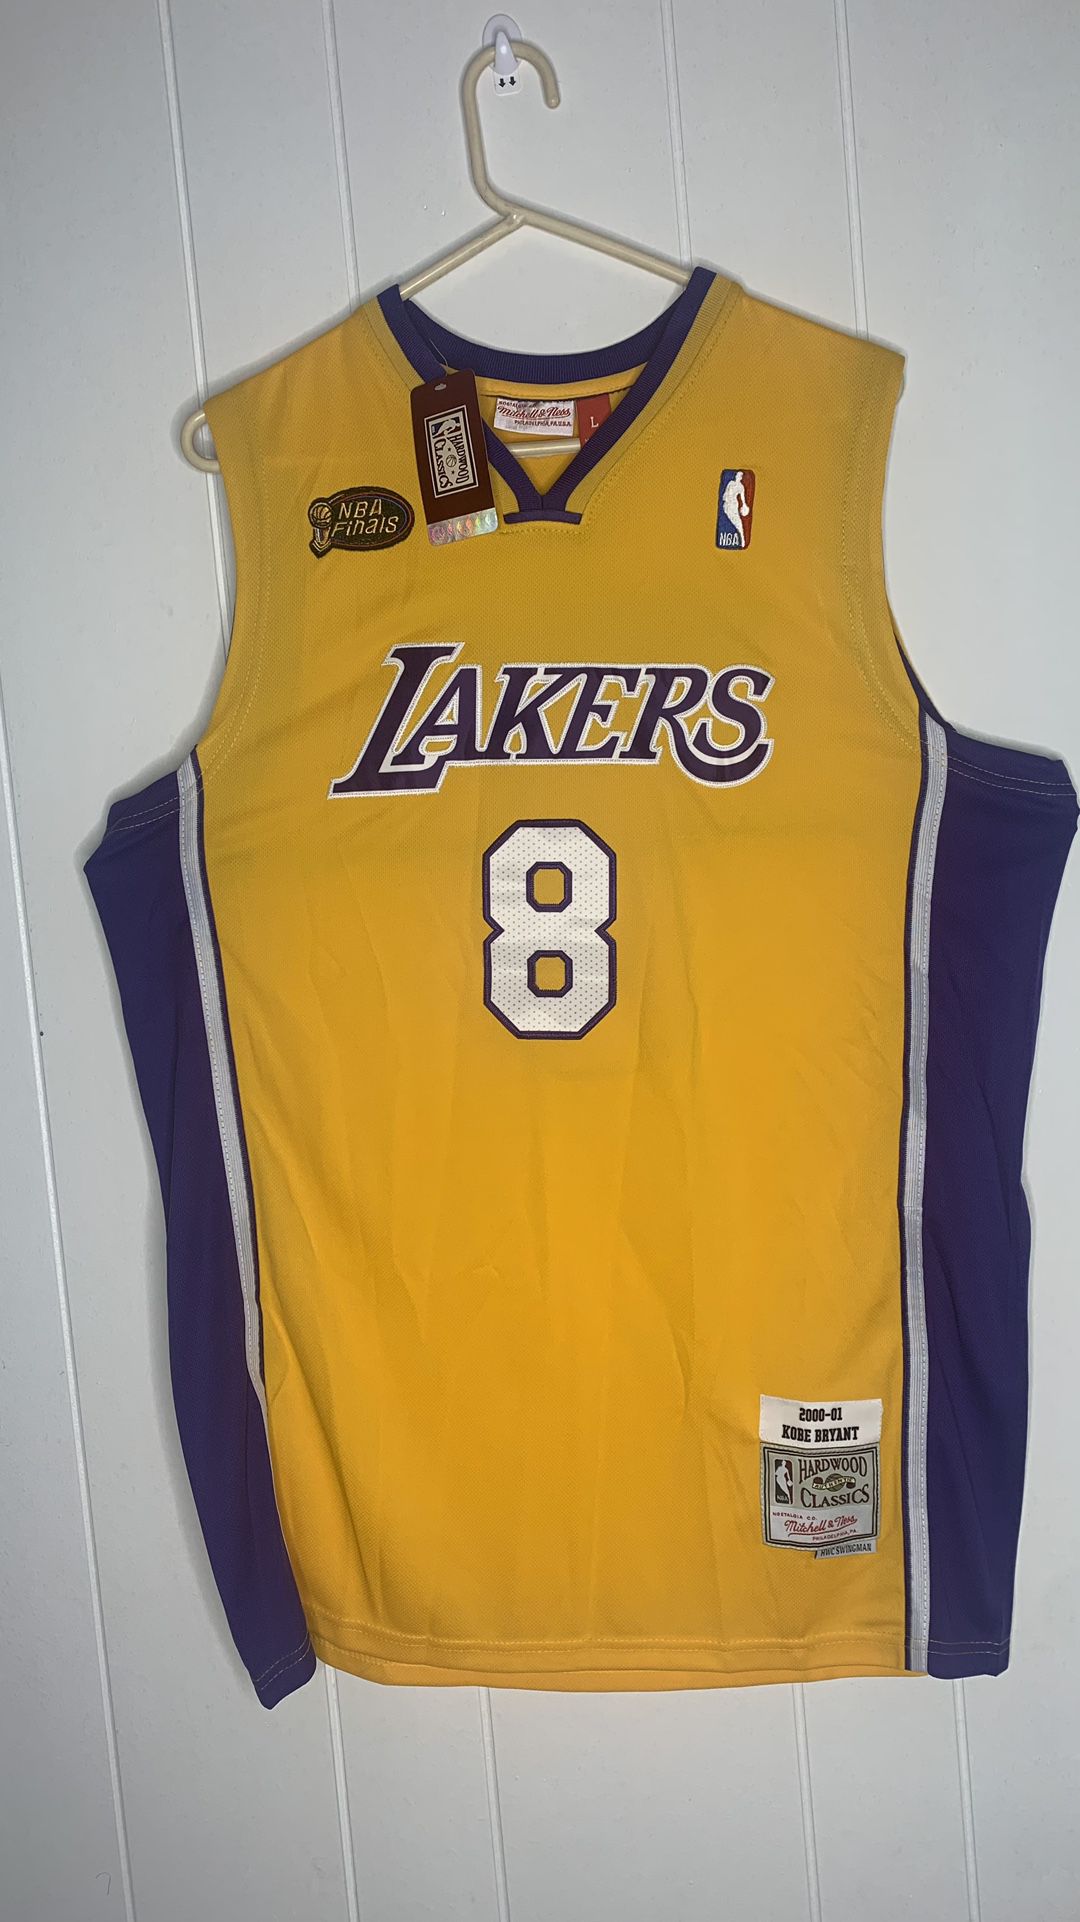 Kobe Bryant Basketball Jersey #8